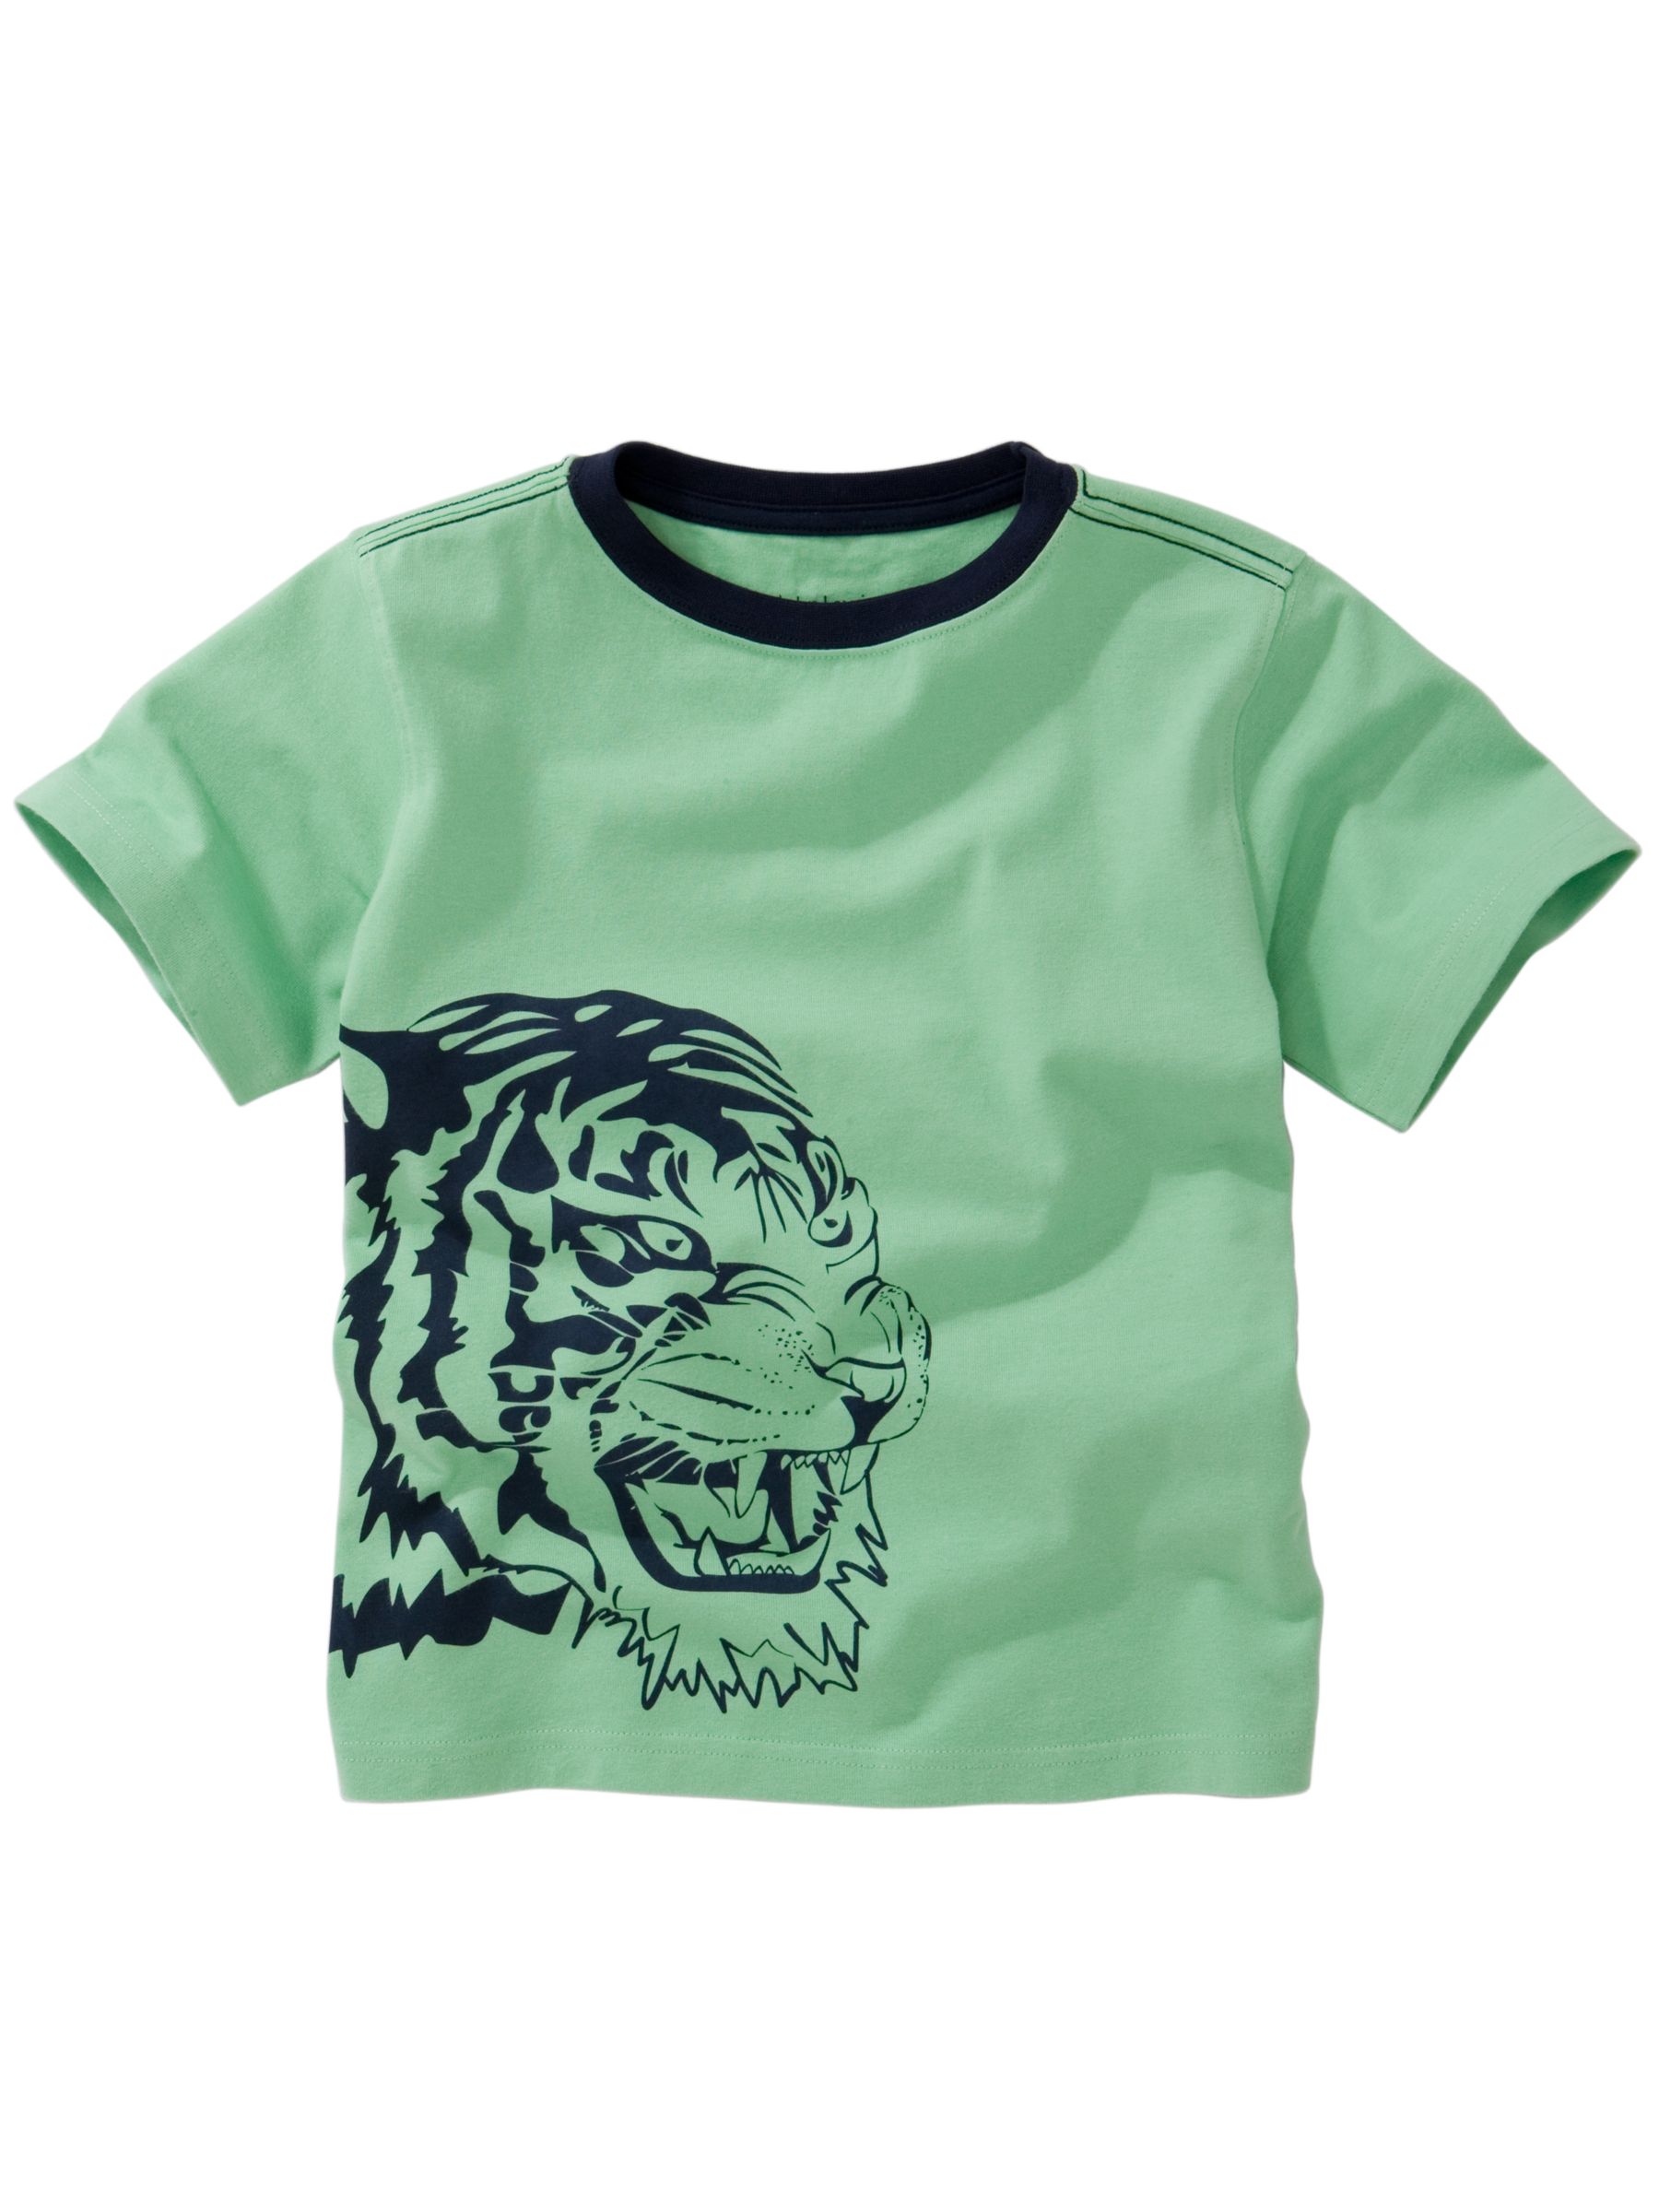 Tiger Graphic T-Shirt, Green